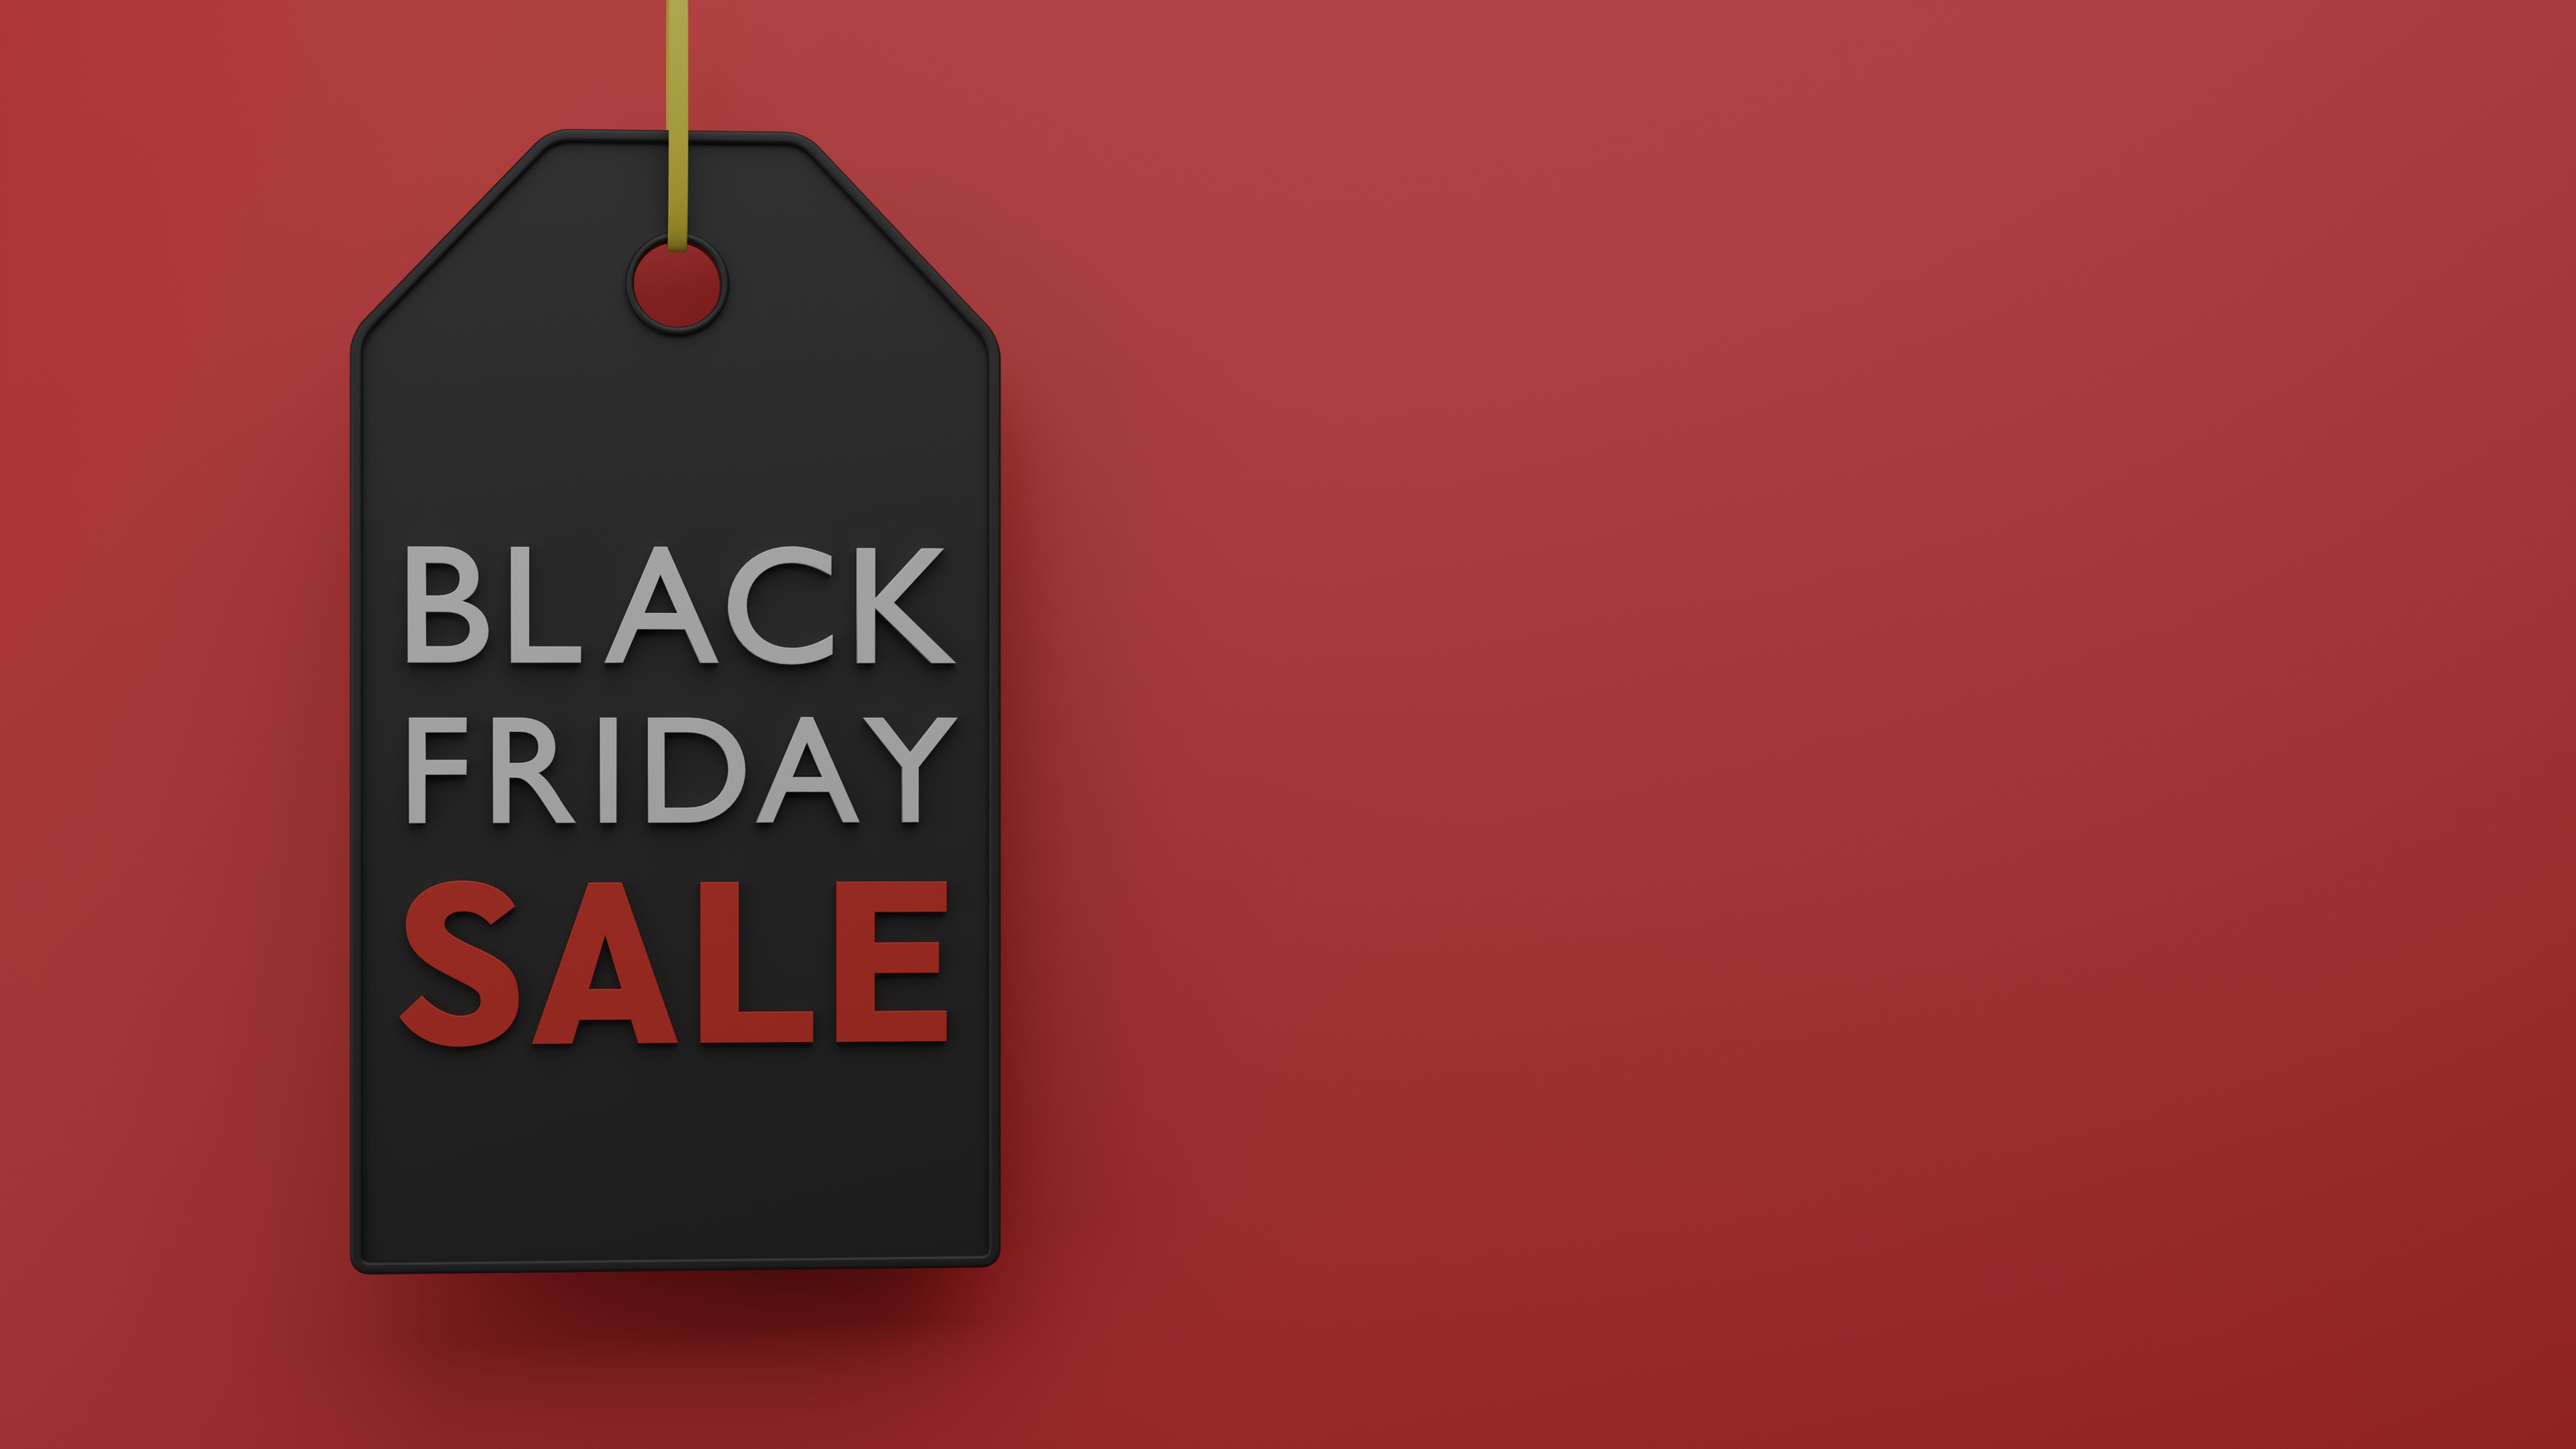 Black Friday Sale dark price tag 3D render illustration